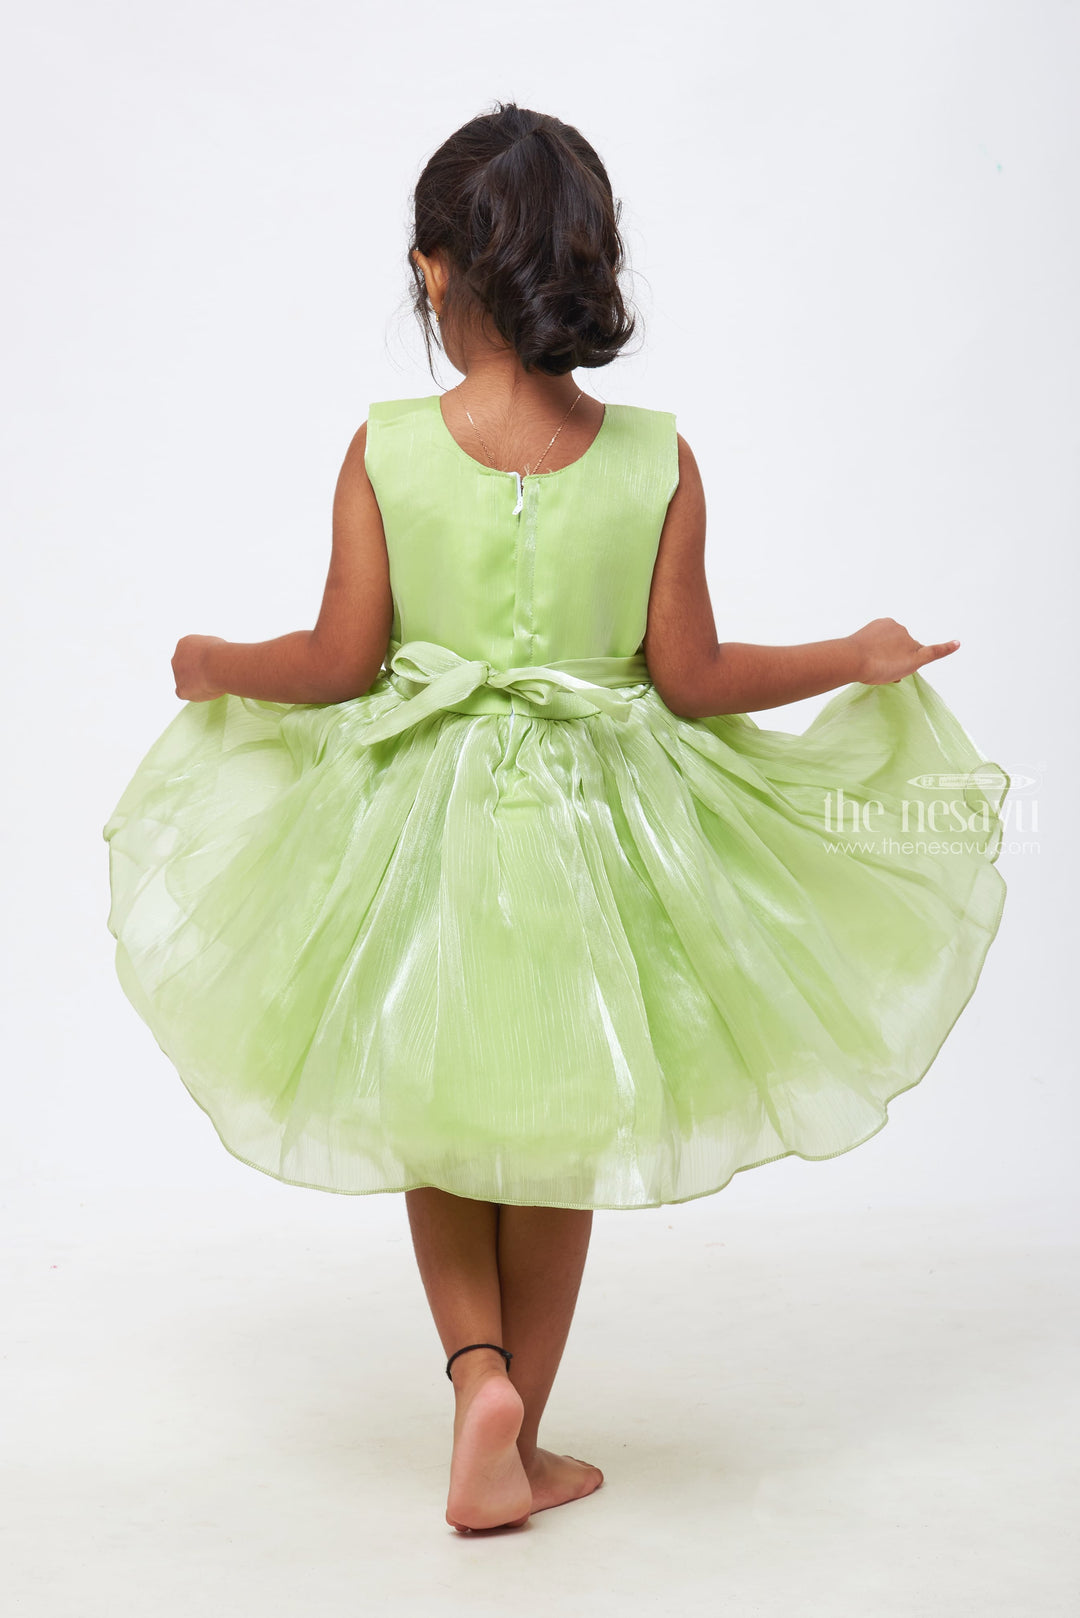 The Nesavu Girls Fancy Party Frock Emerald Enchantment: Girls Soft Green Tulle Dress with Rosette Accents Nesavu Elegance at Every Event | Girls Designer Party Frocks | The Nesavu